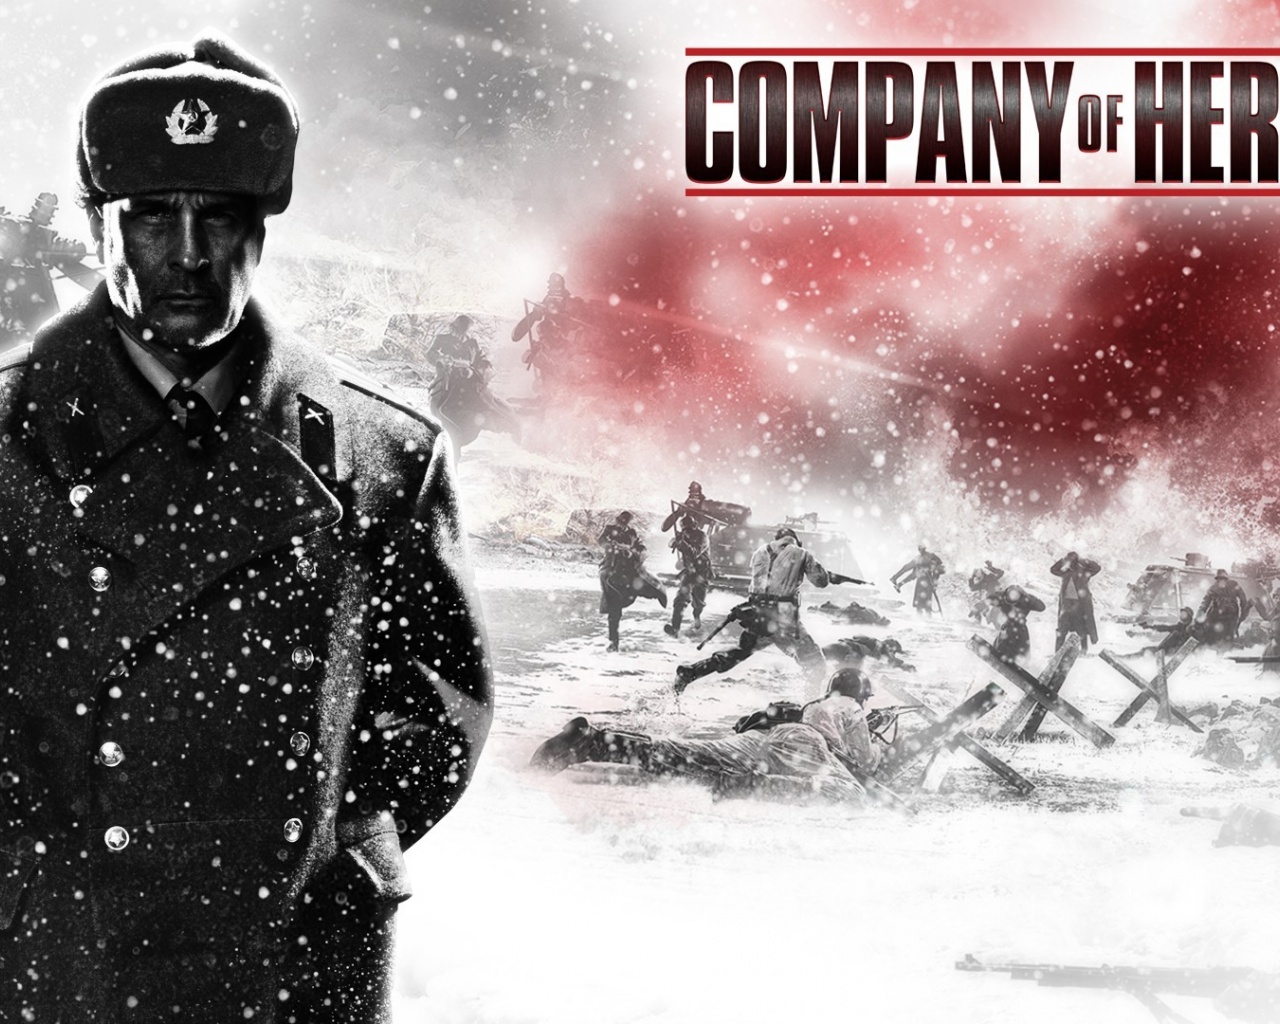 Company Of Heroes 2